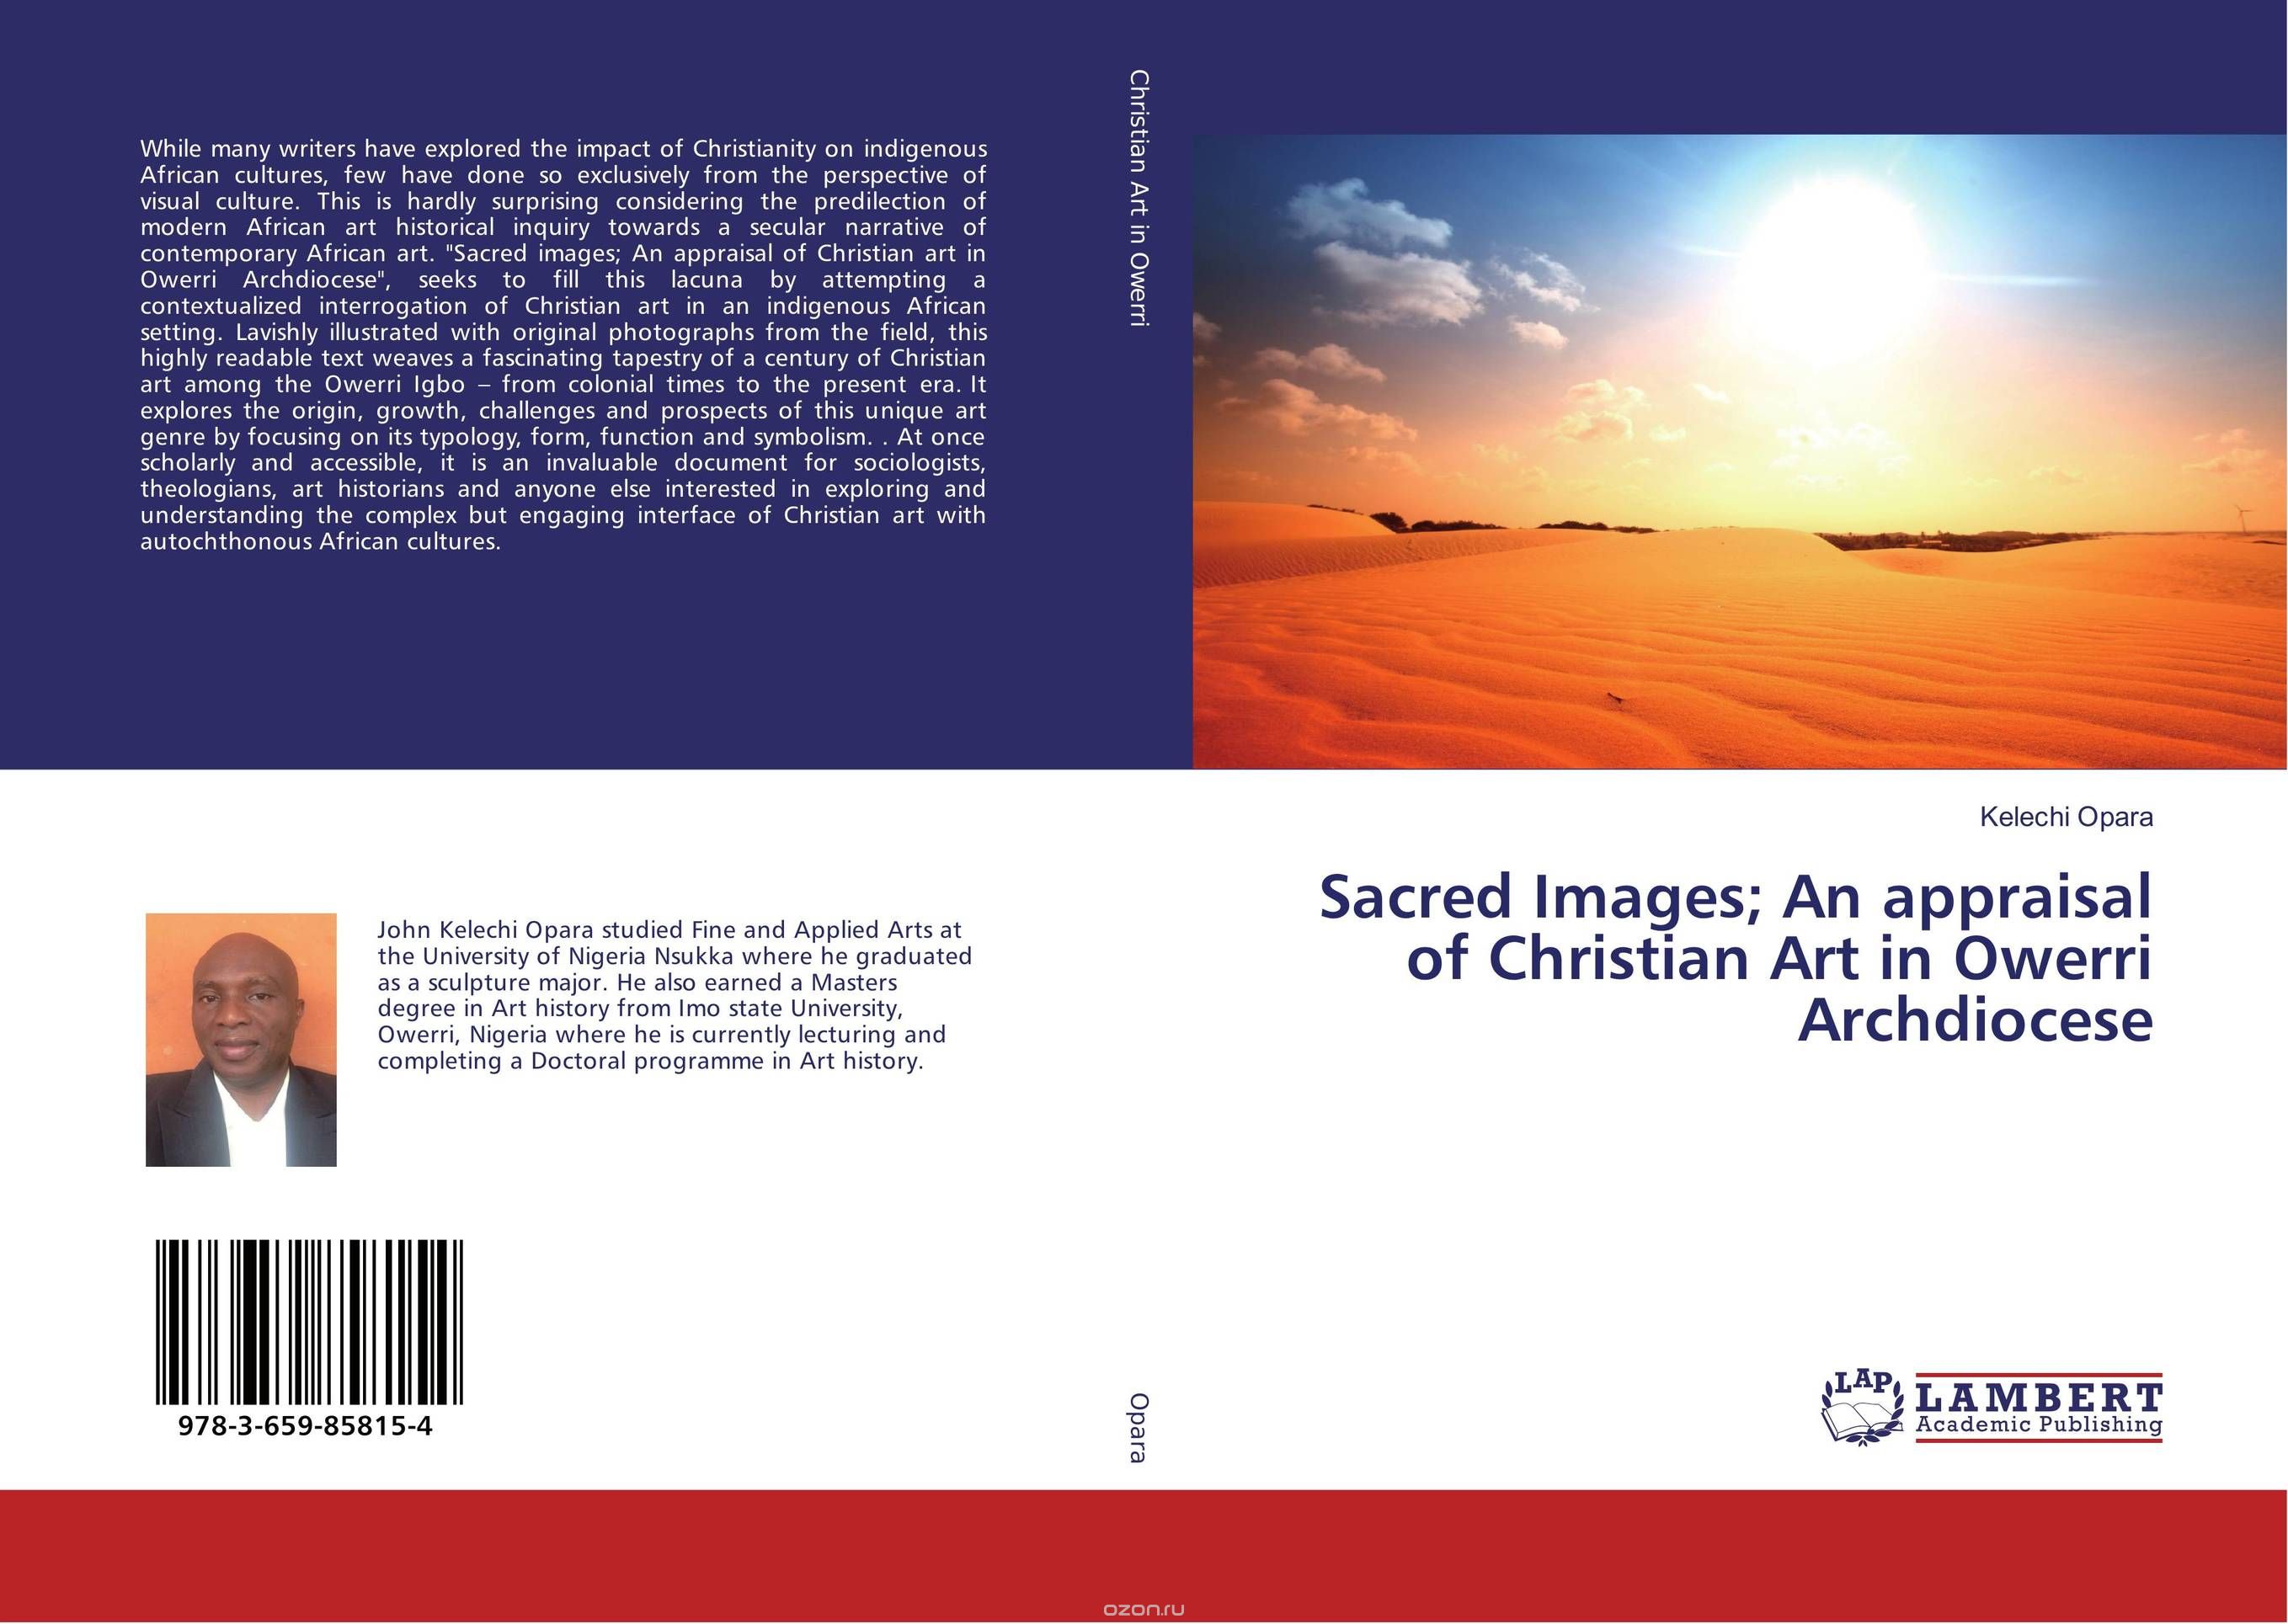 Скачать книгу "Sacred Images; An appraisal of Christian Art in Owerri Archdiocese"